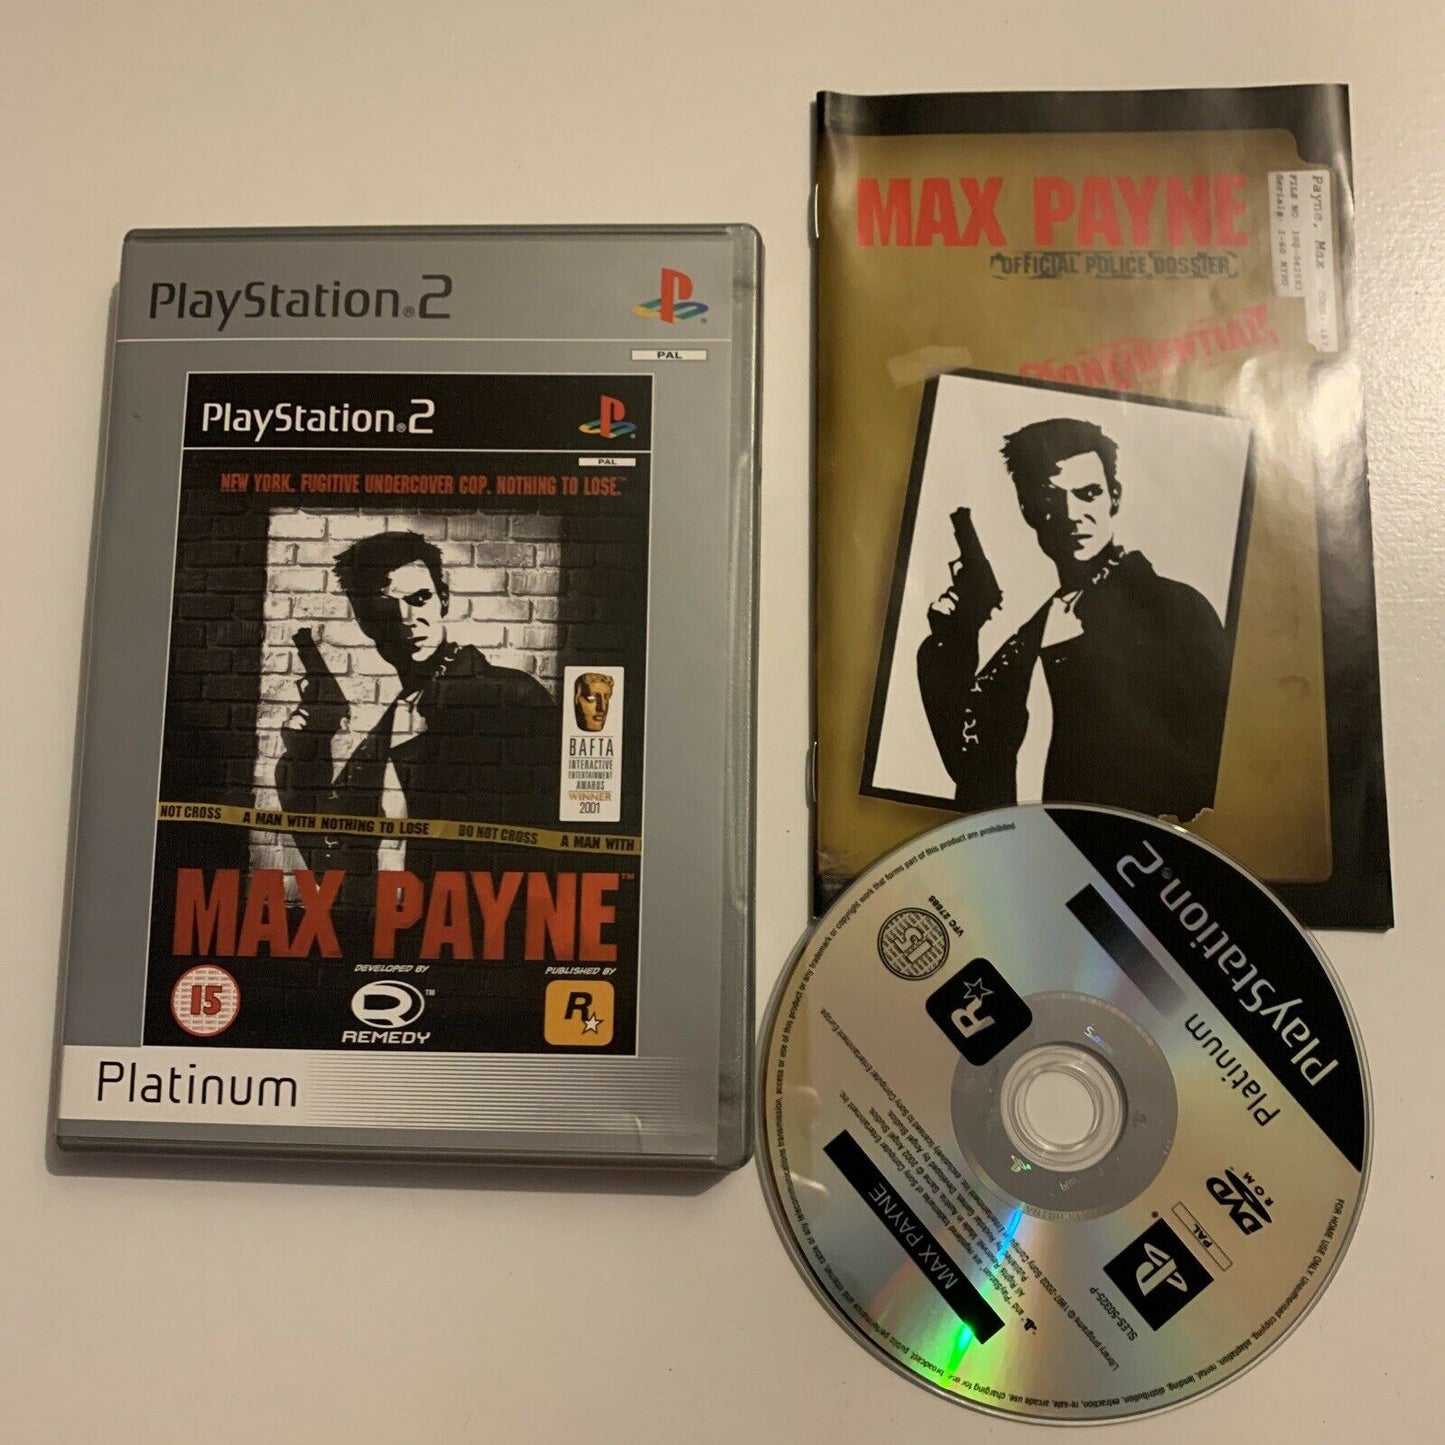 Max Payne - Platinum Edition - PS2 With Manual (PAL, 2001) PlayStation 2